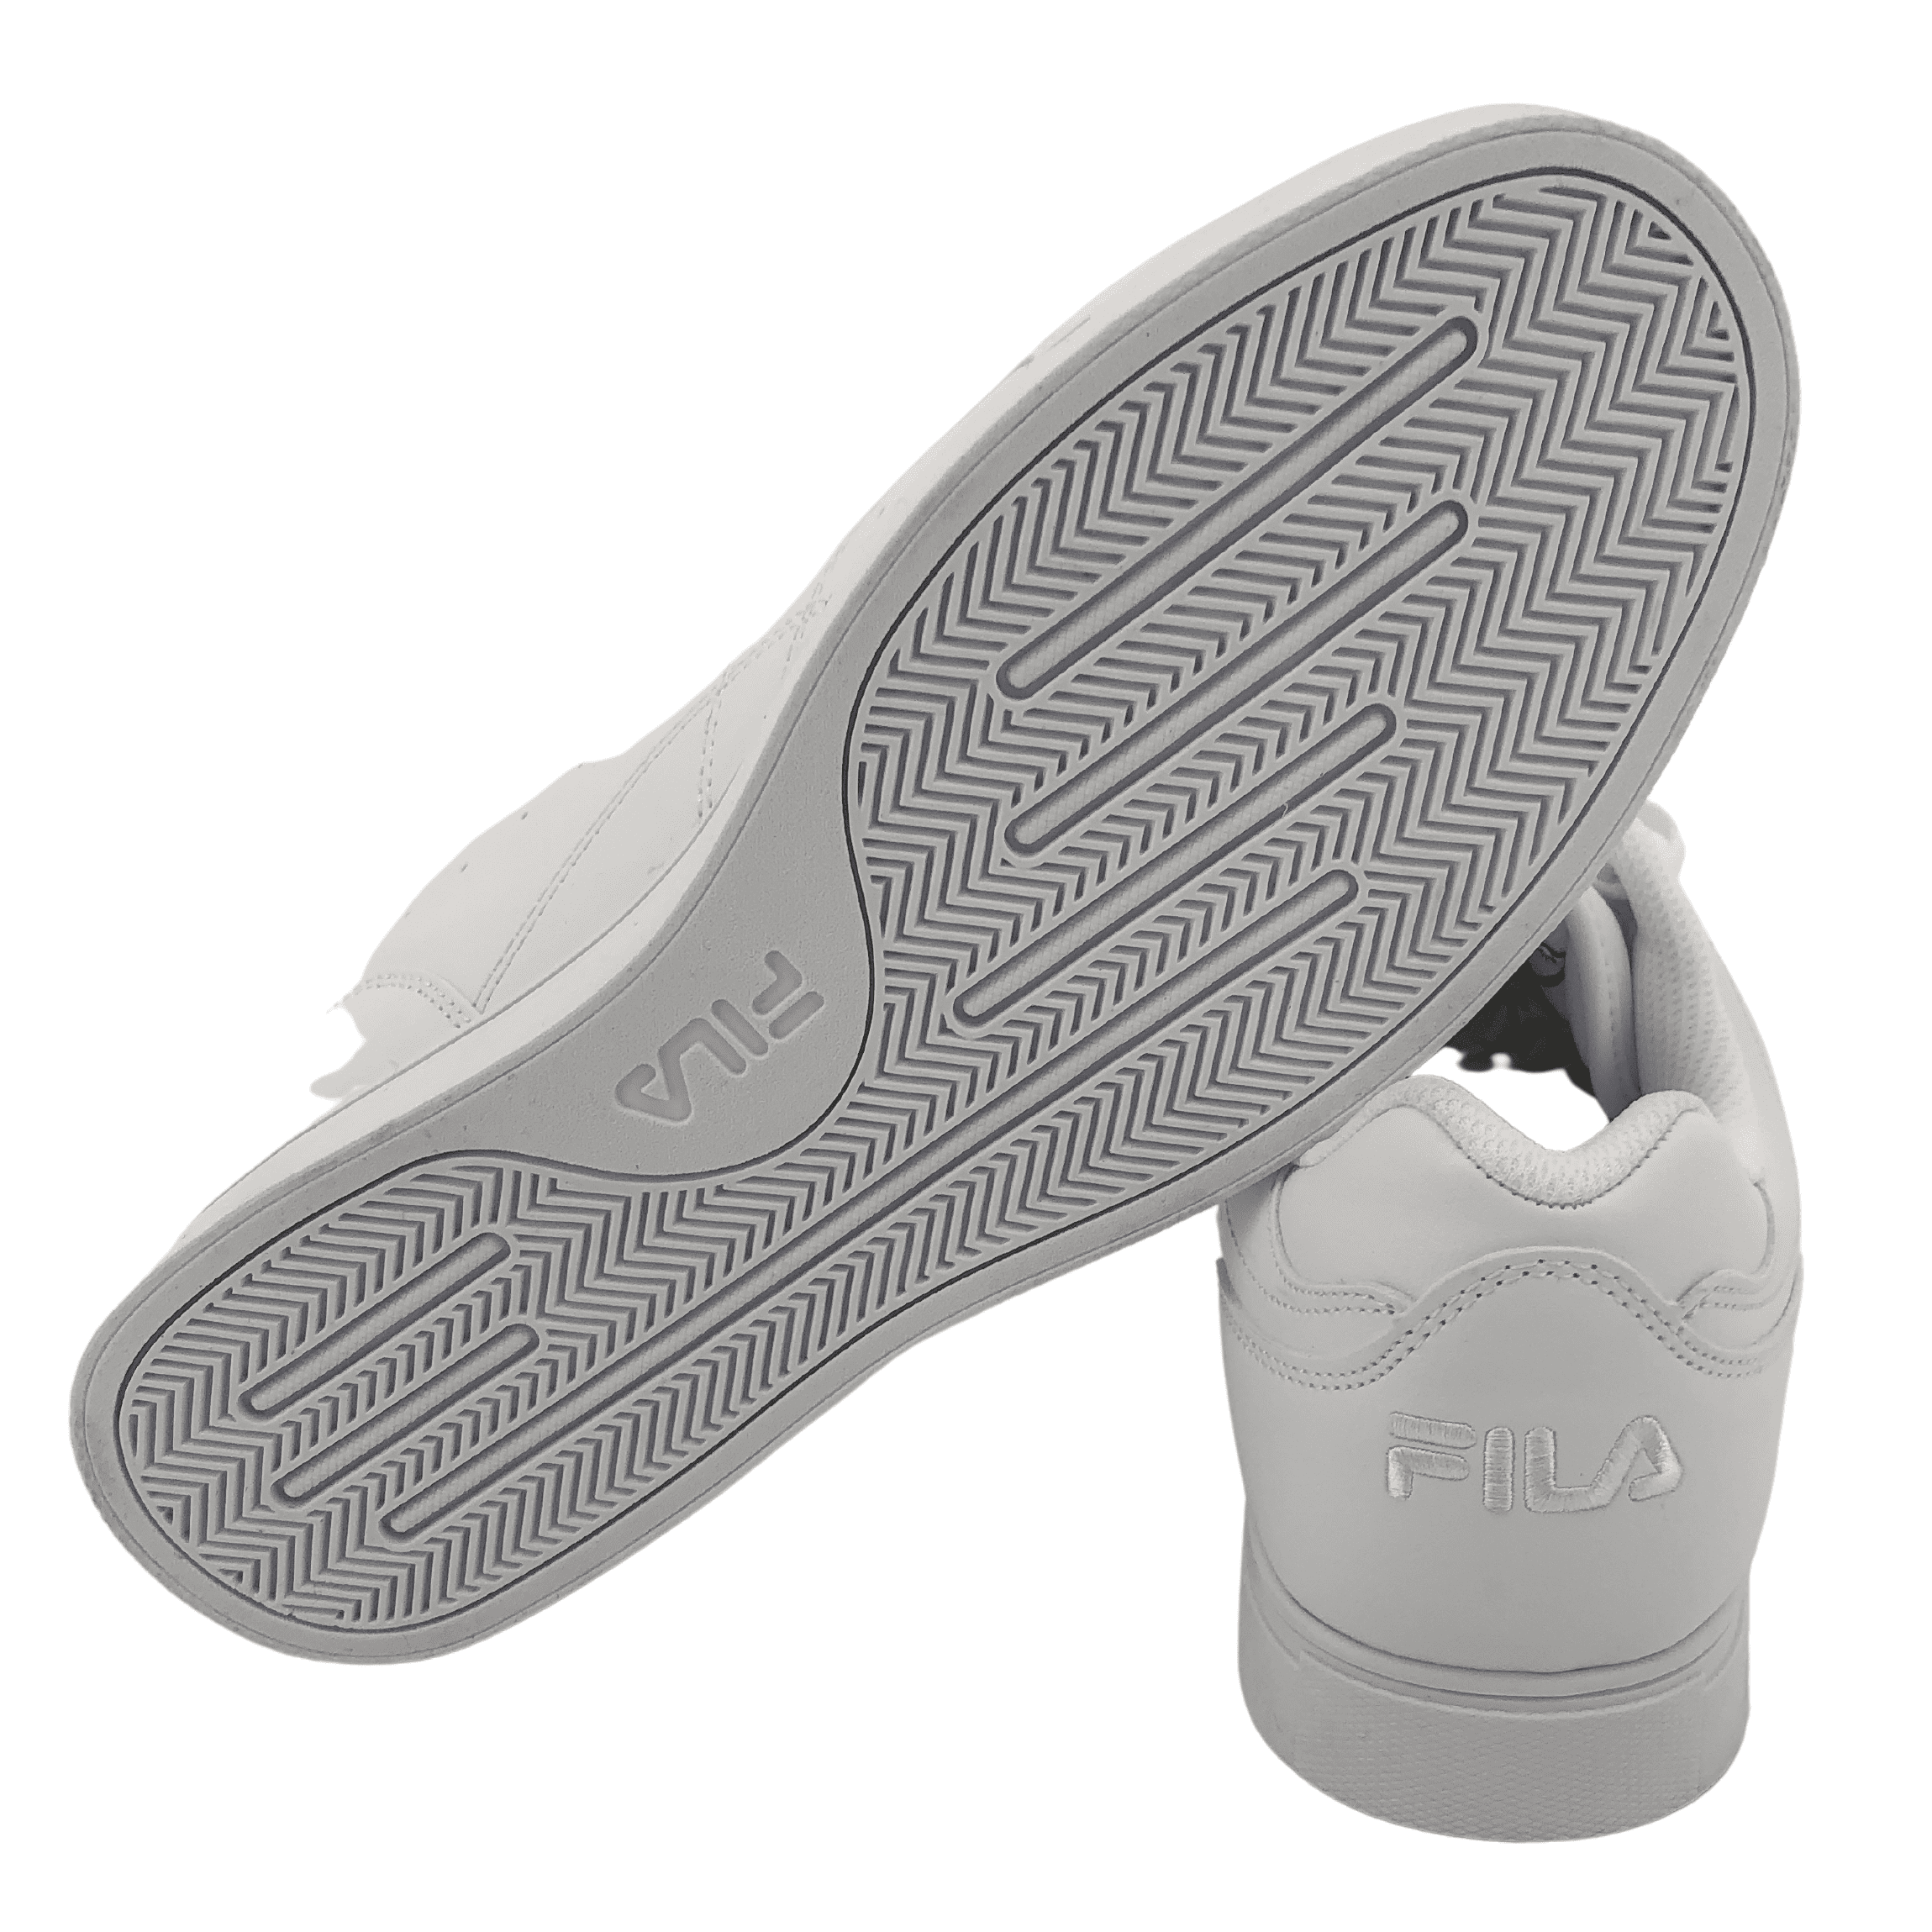 Fila Men's Running Shoe / West Naples Style / White / Size 8